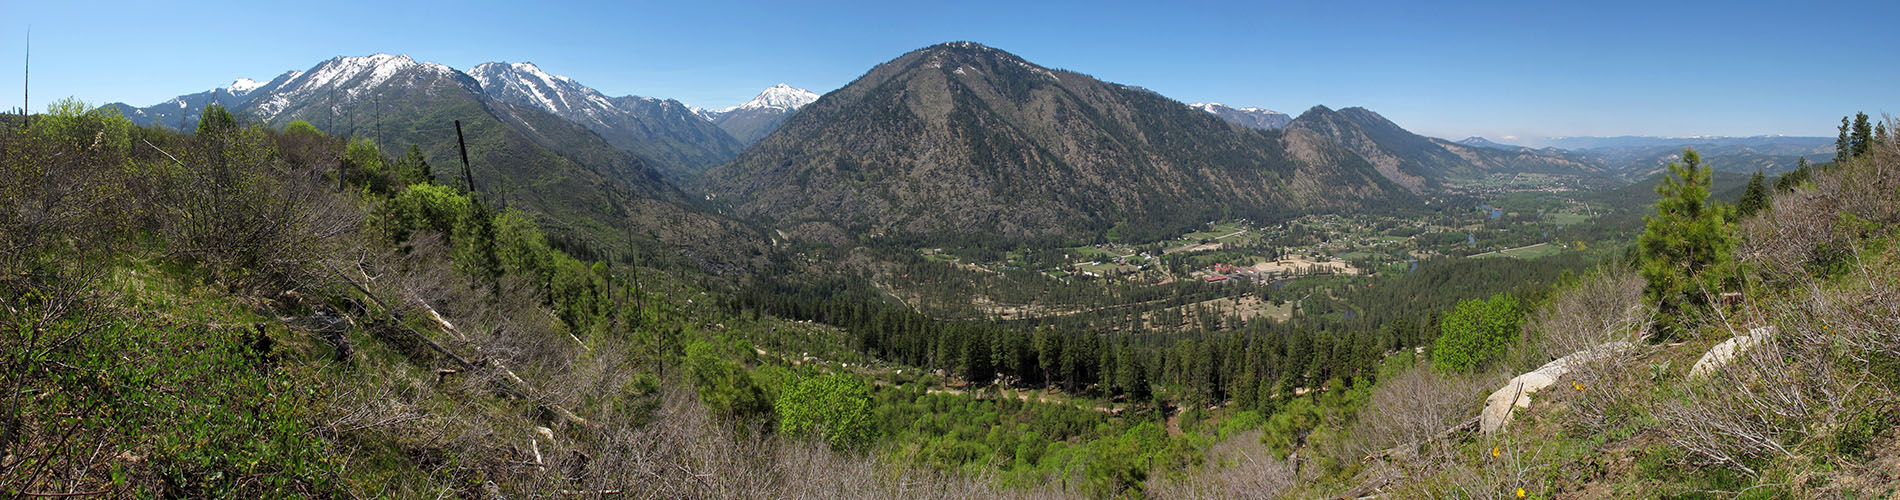 Mountain Home Ridge panorama [Rat Creek Ridge Trail, Wenatchee National Forest, Chelan County, Washington]